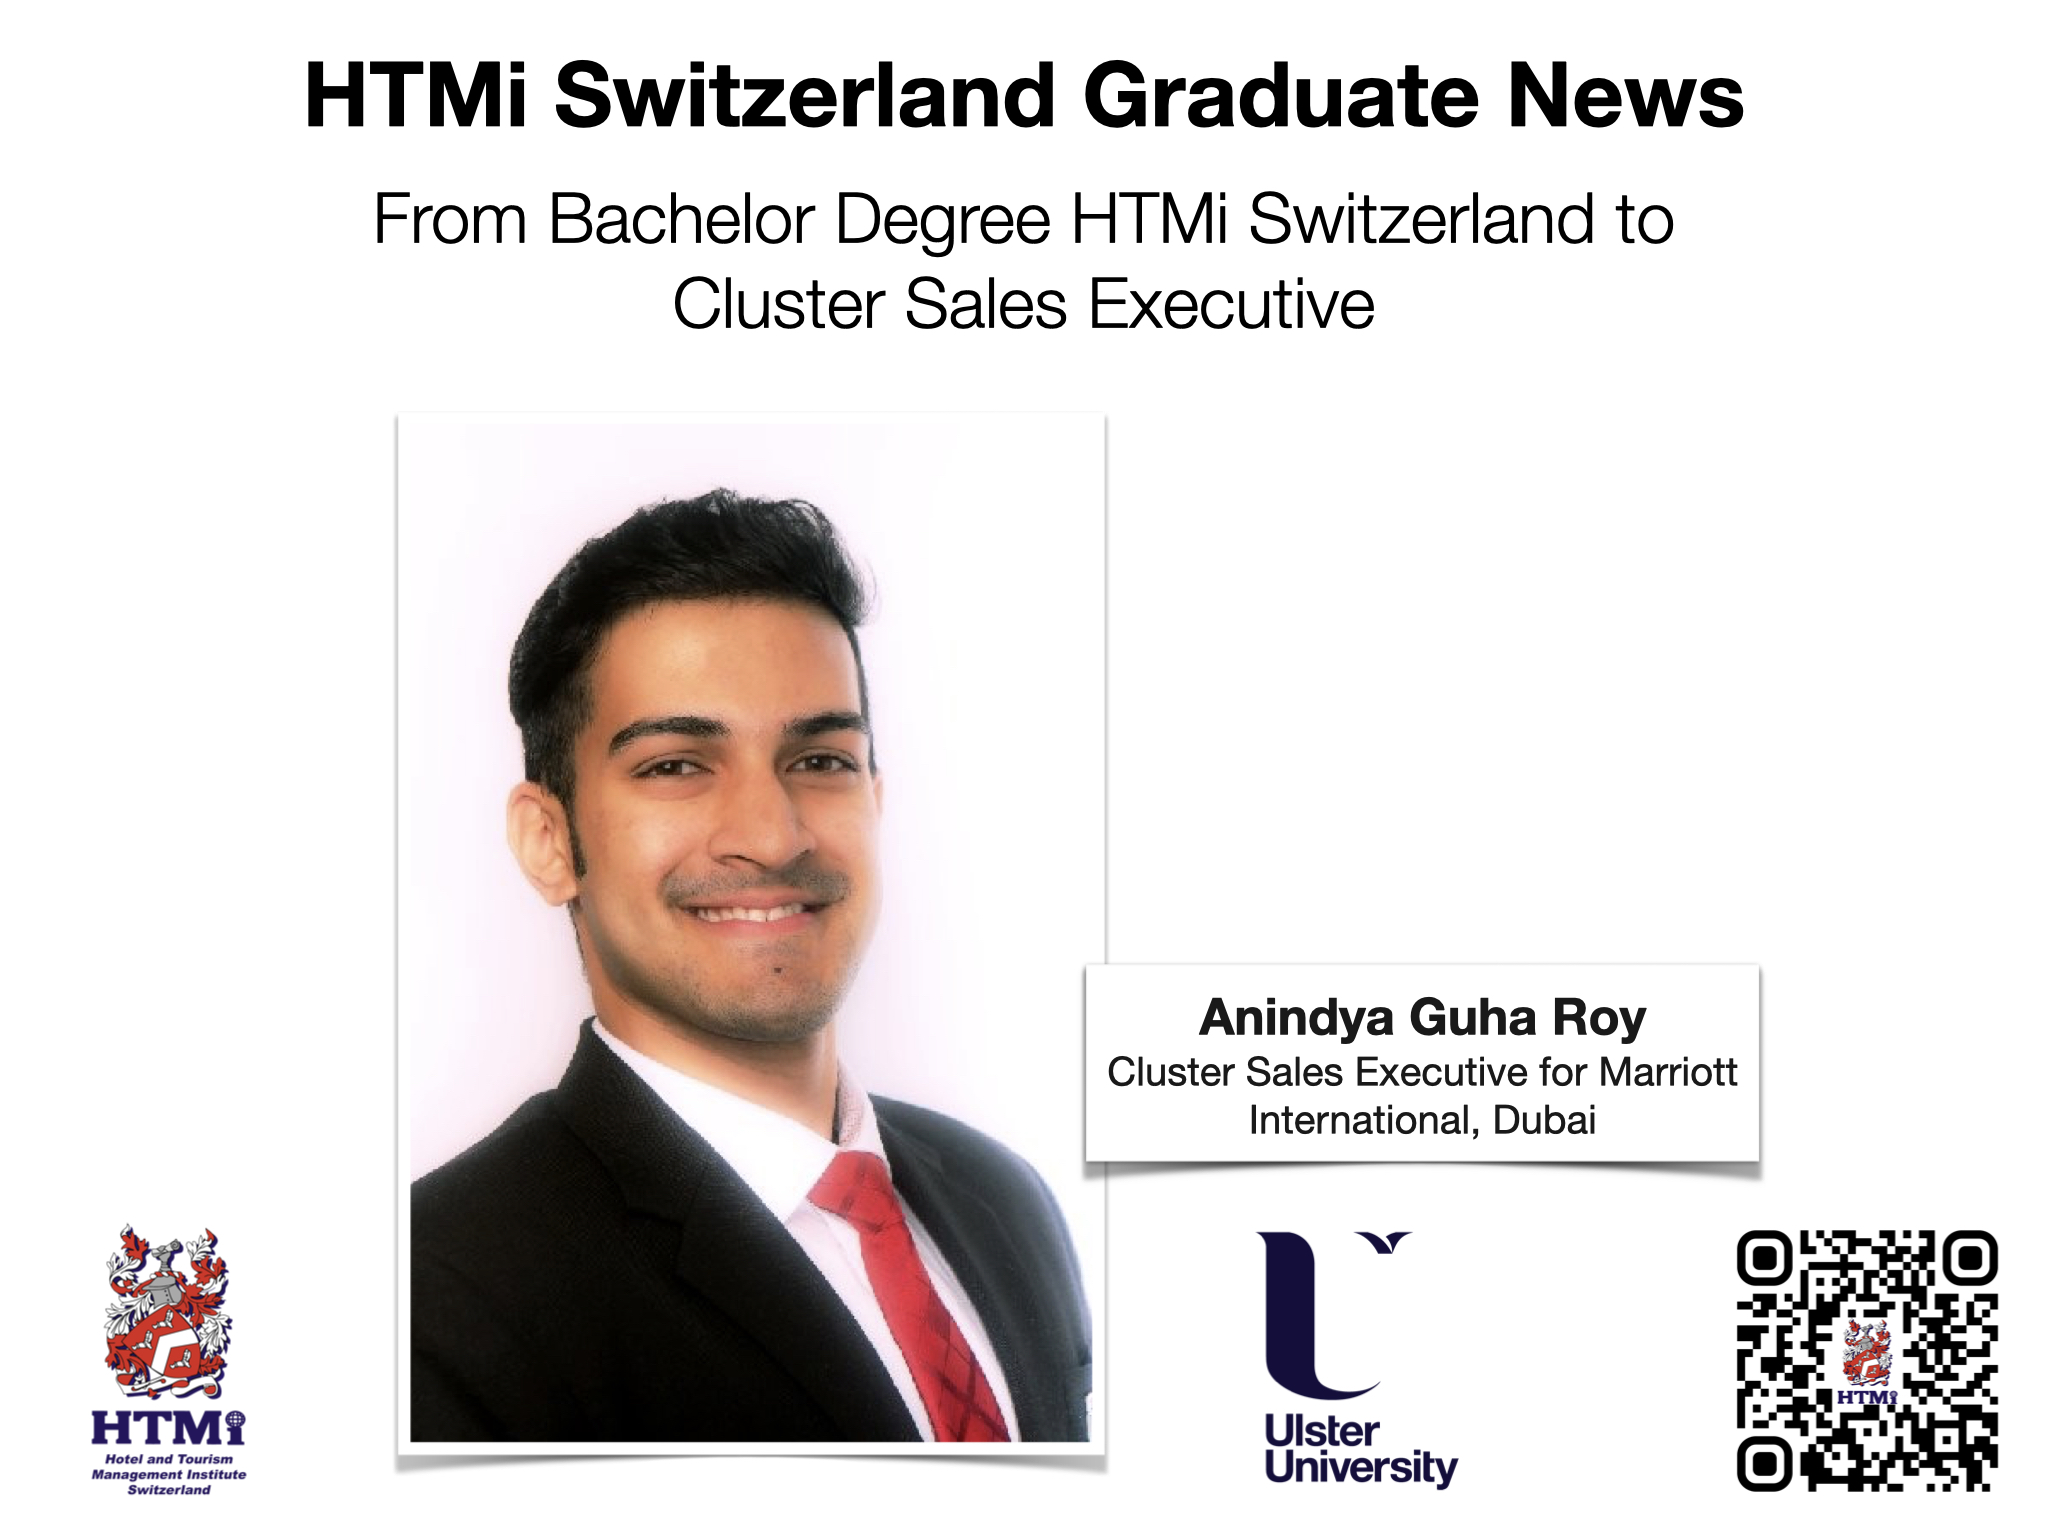 Anindya Guha Roy - From Bachelor Degree HTMi Switzerland to Cluster Sales Executive - HTMi Switzerland Graduate News